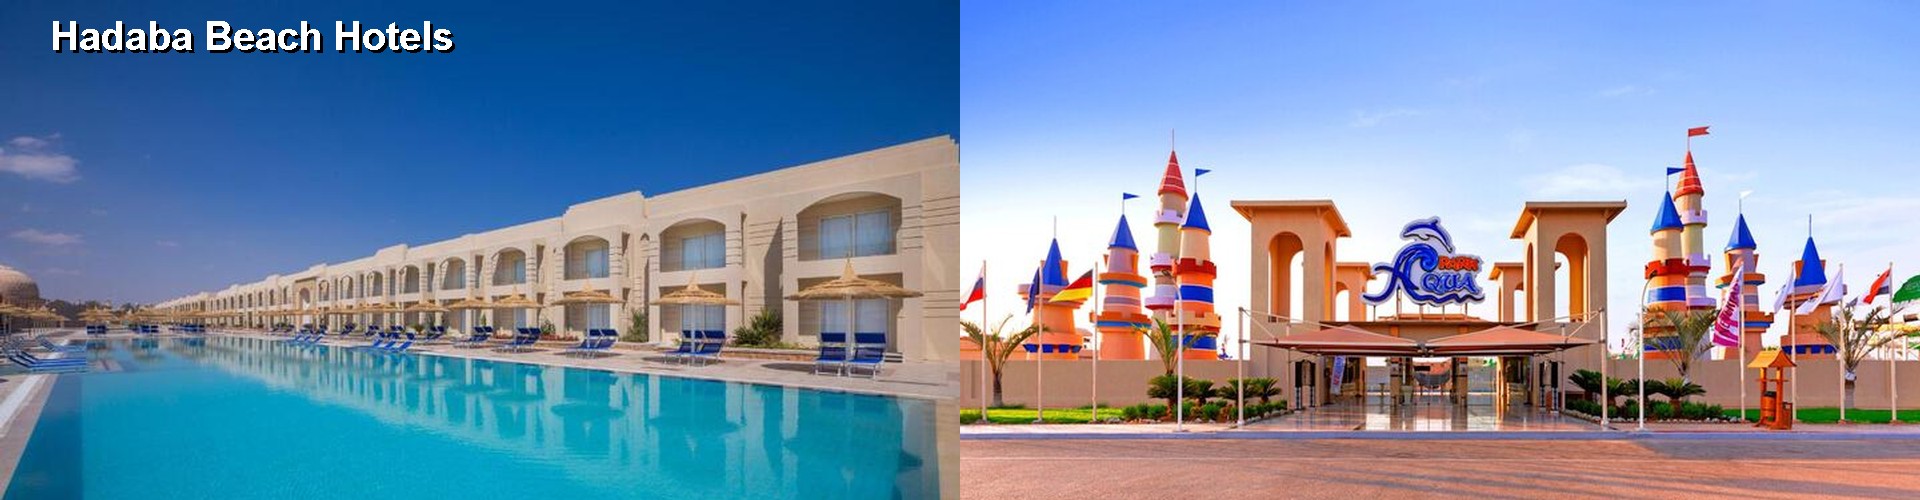 5 Best Hotels near Hadaba Beach